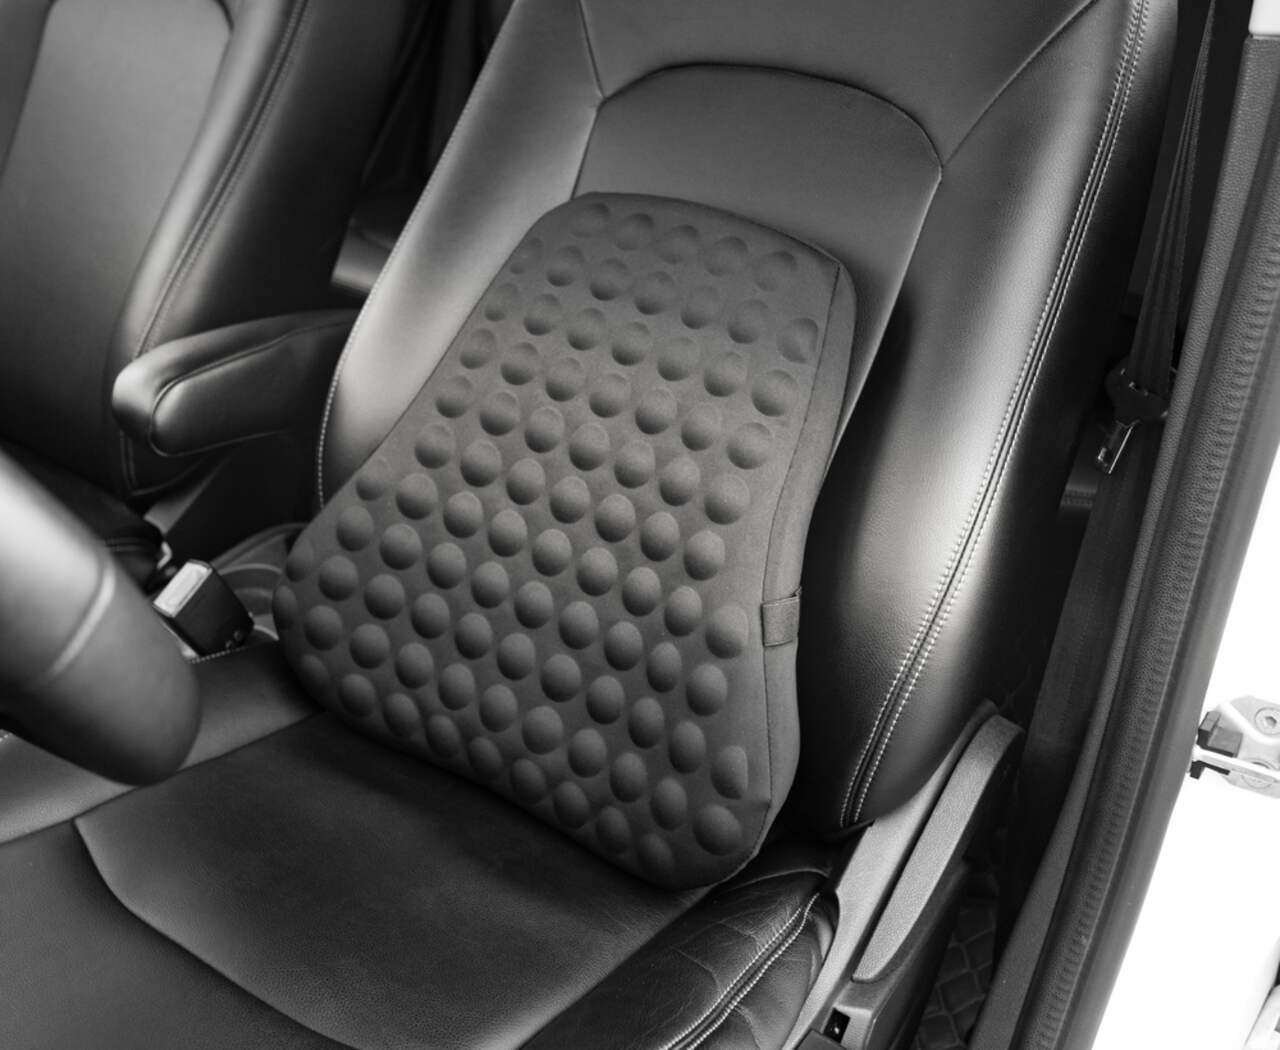 Treksafe Automotive Heated Lumbar Support Cushion